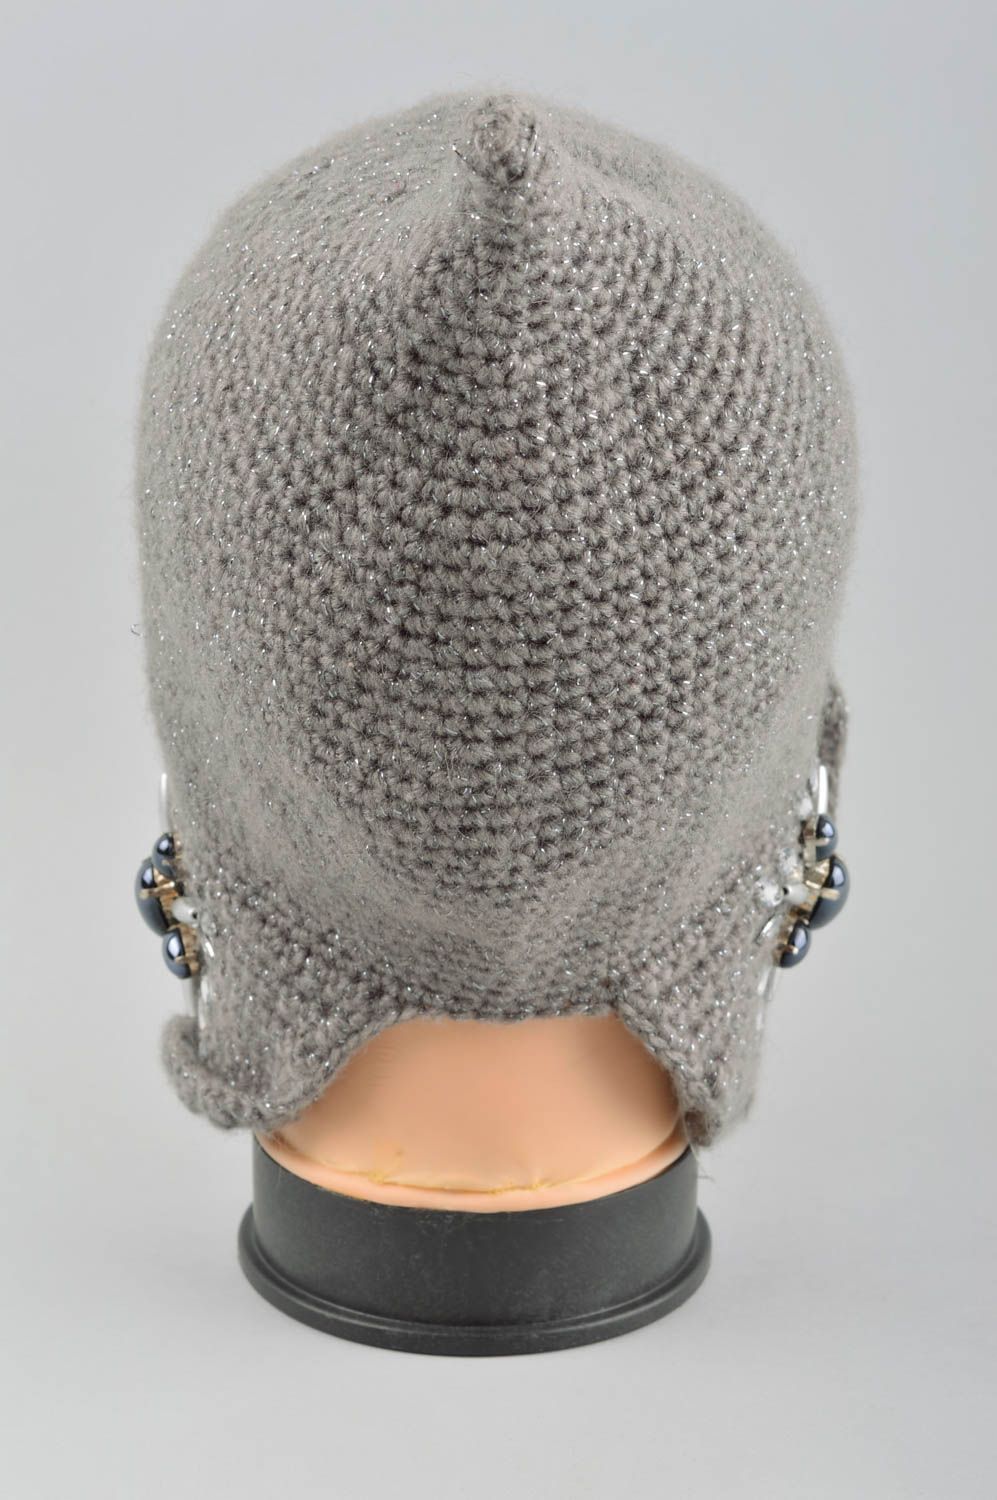 Handmade designer female cap unusual knitted hat stylish winter accessory photo 4